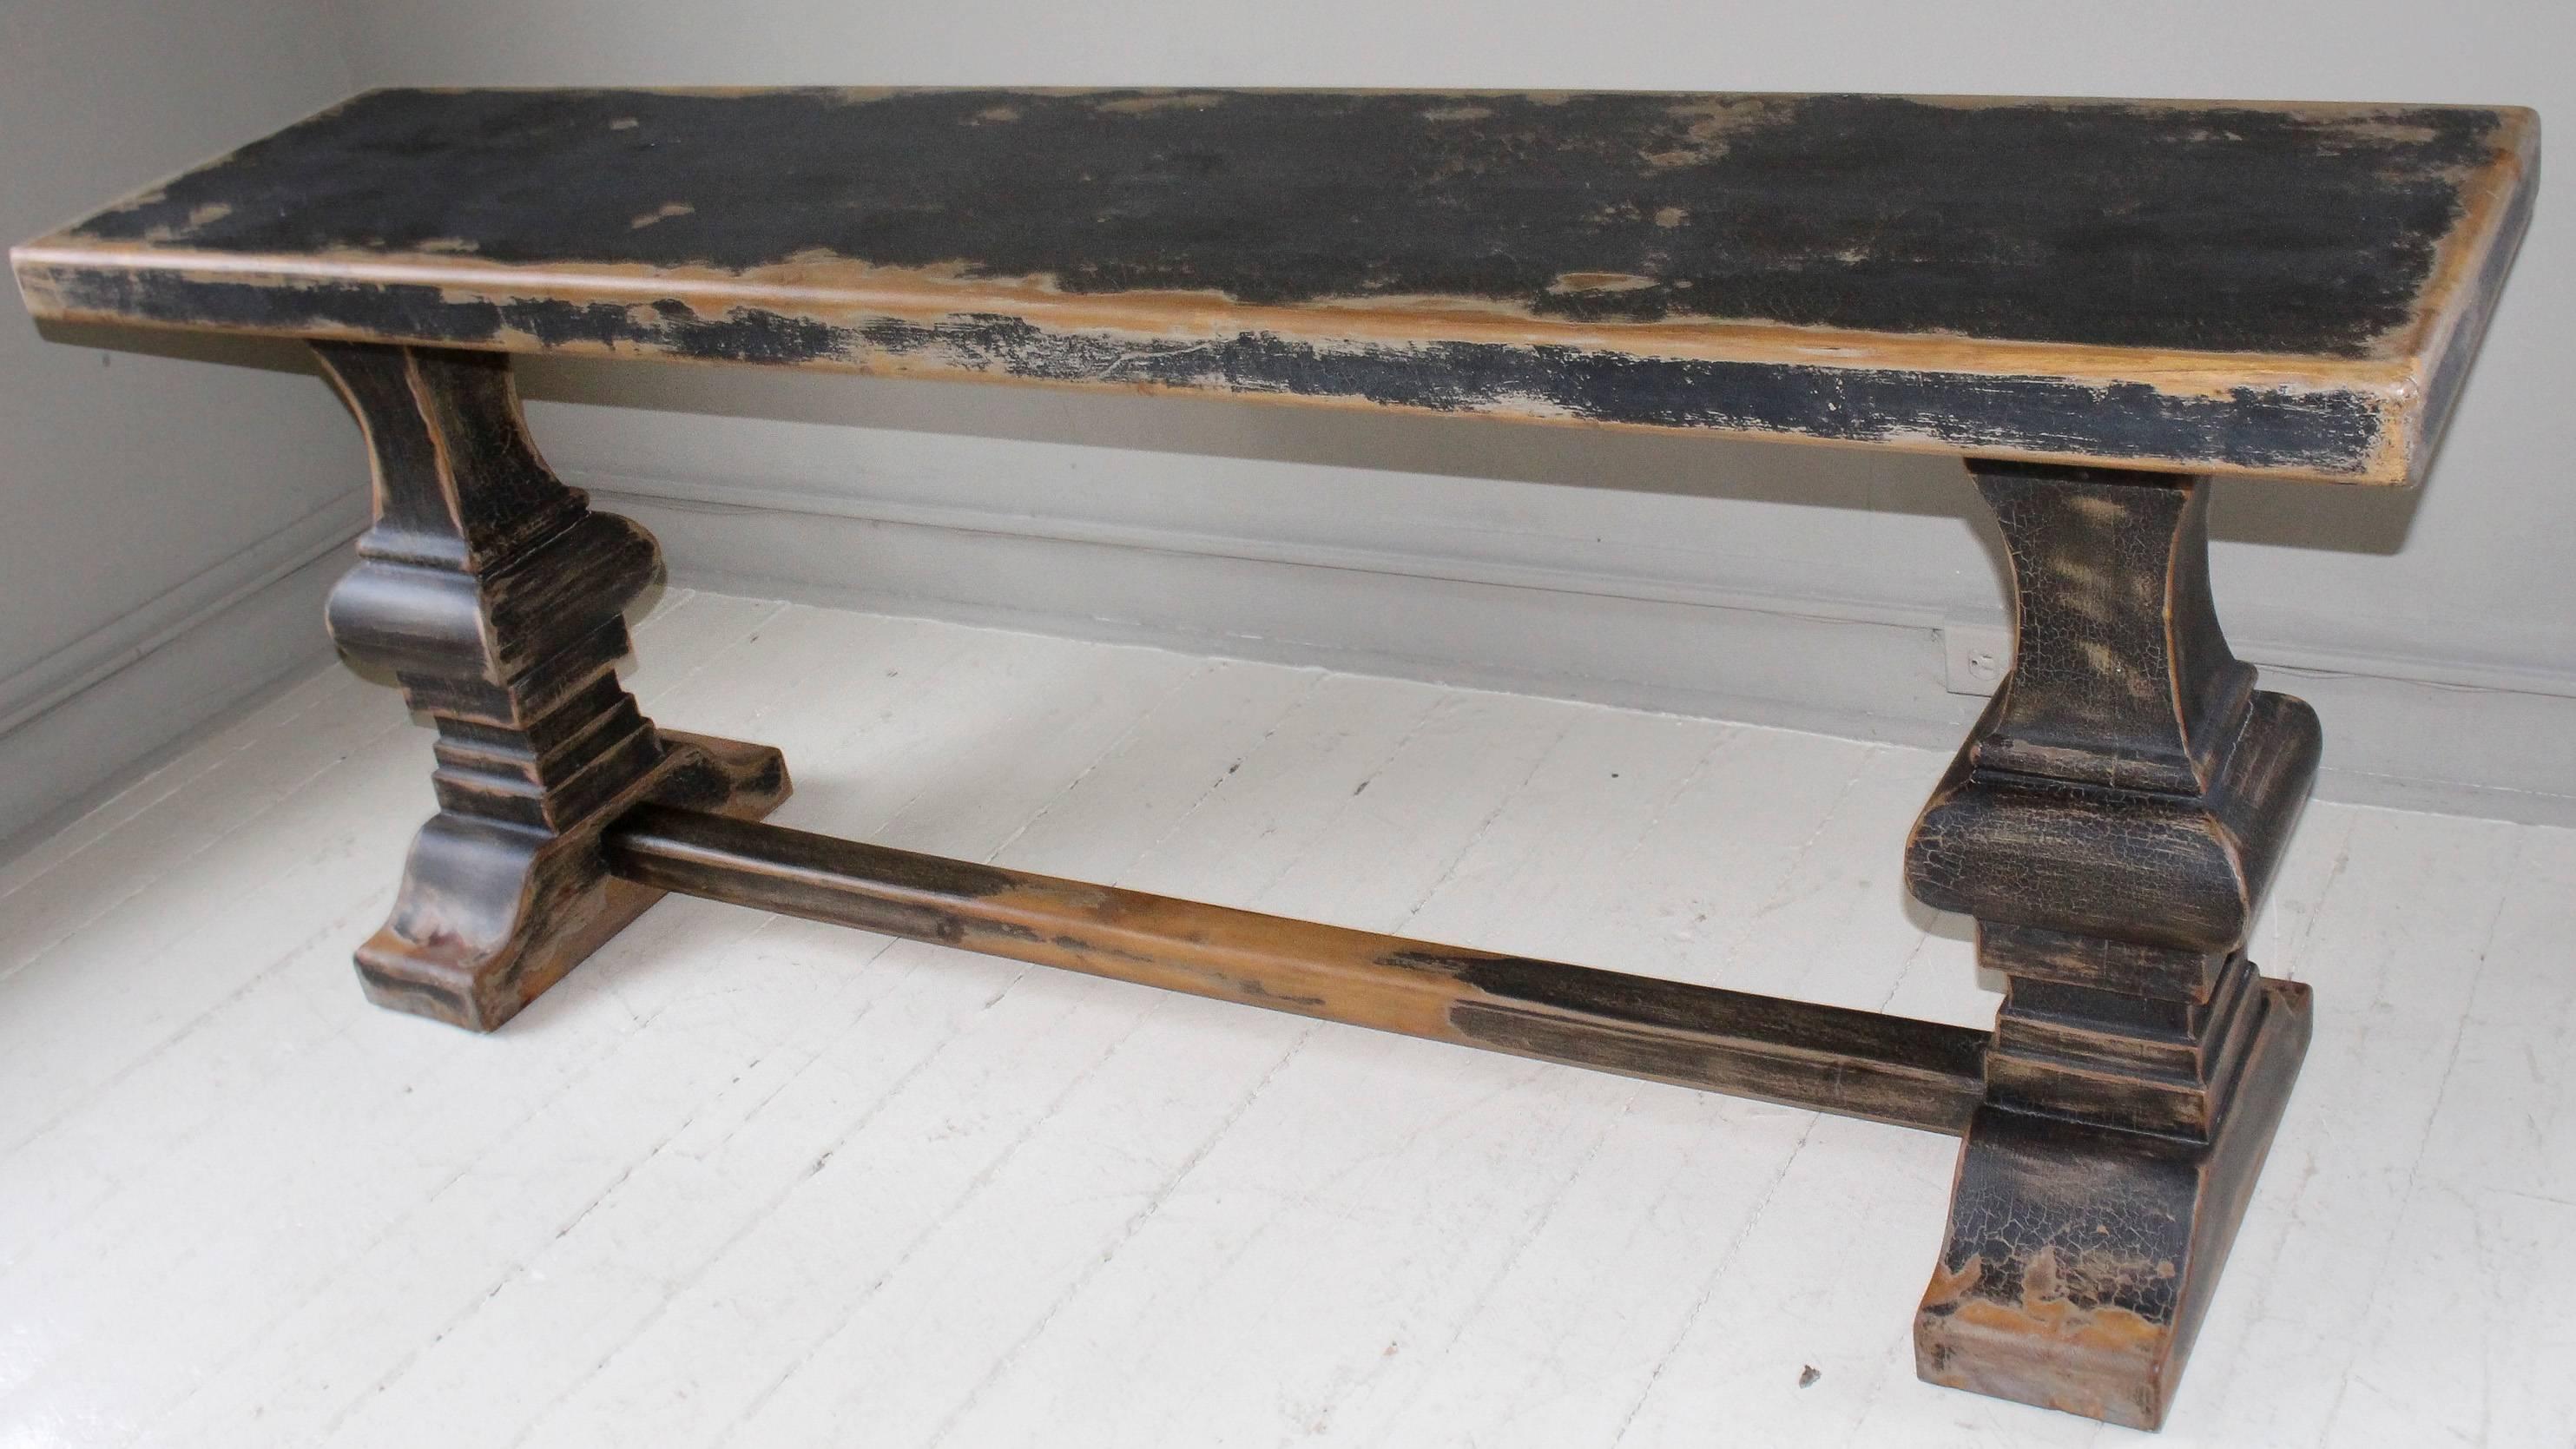 Elmwood trestle console table, 21st century, Southeast Asian, with distressed ebonized finish.